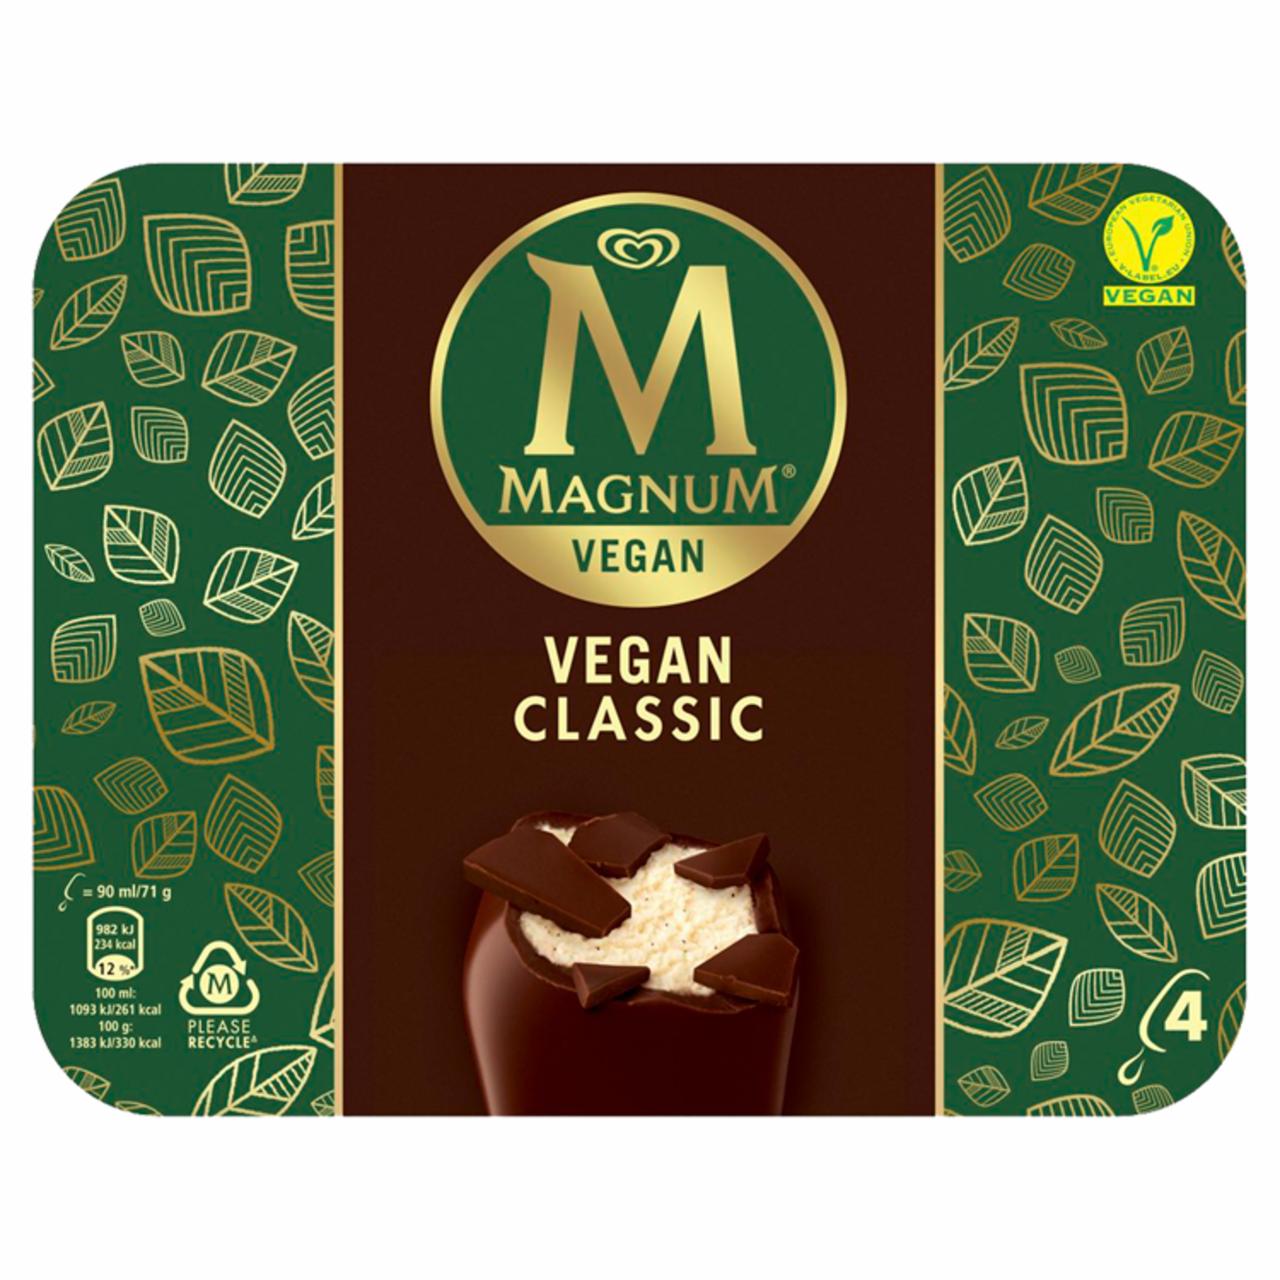 Képek - Magnum multipack jégkrém Vegán Classic 4 x 90 ml